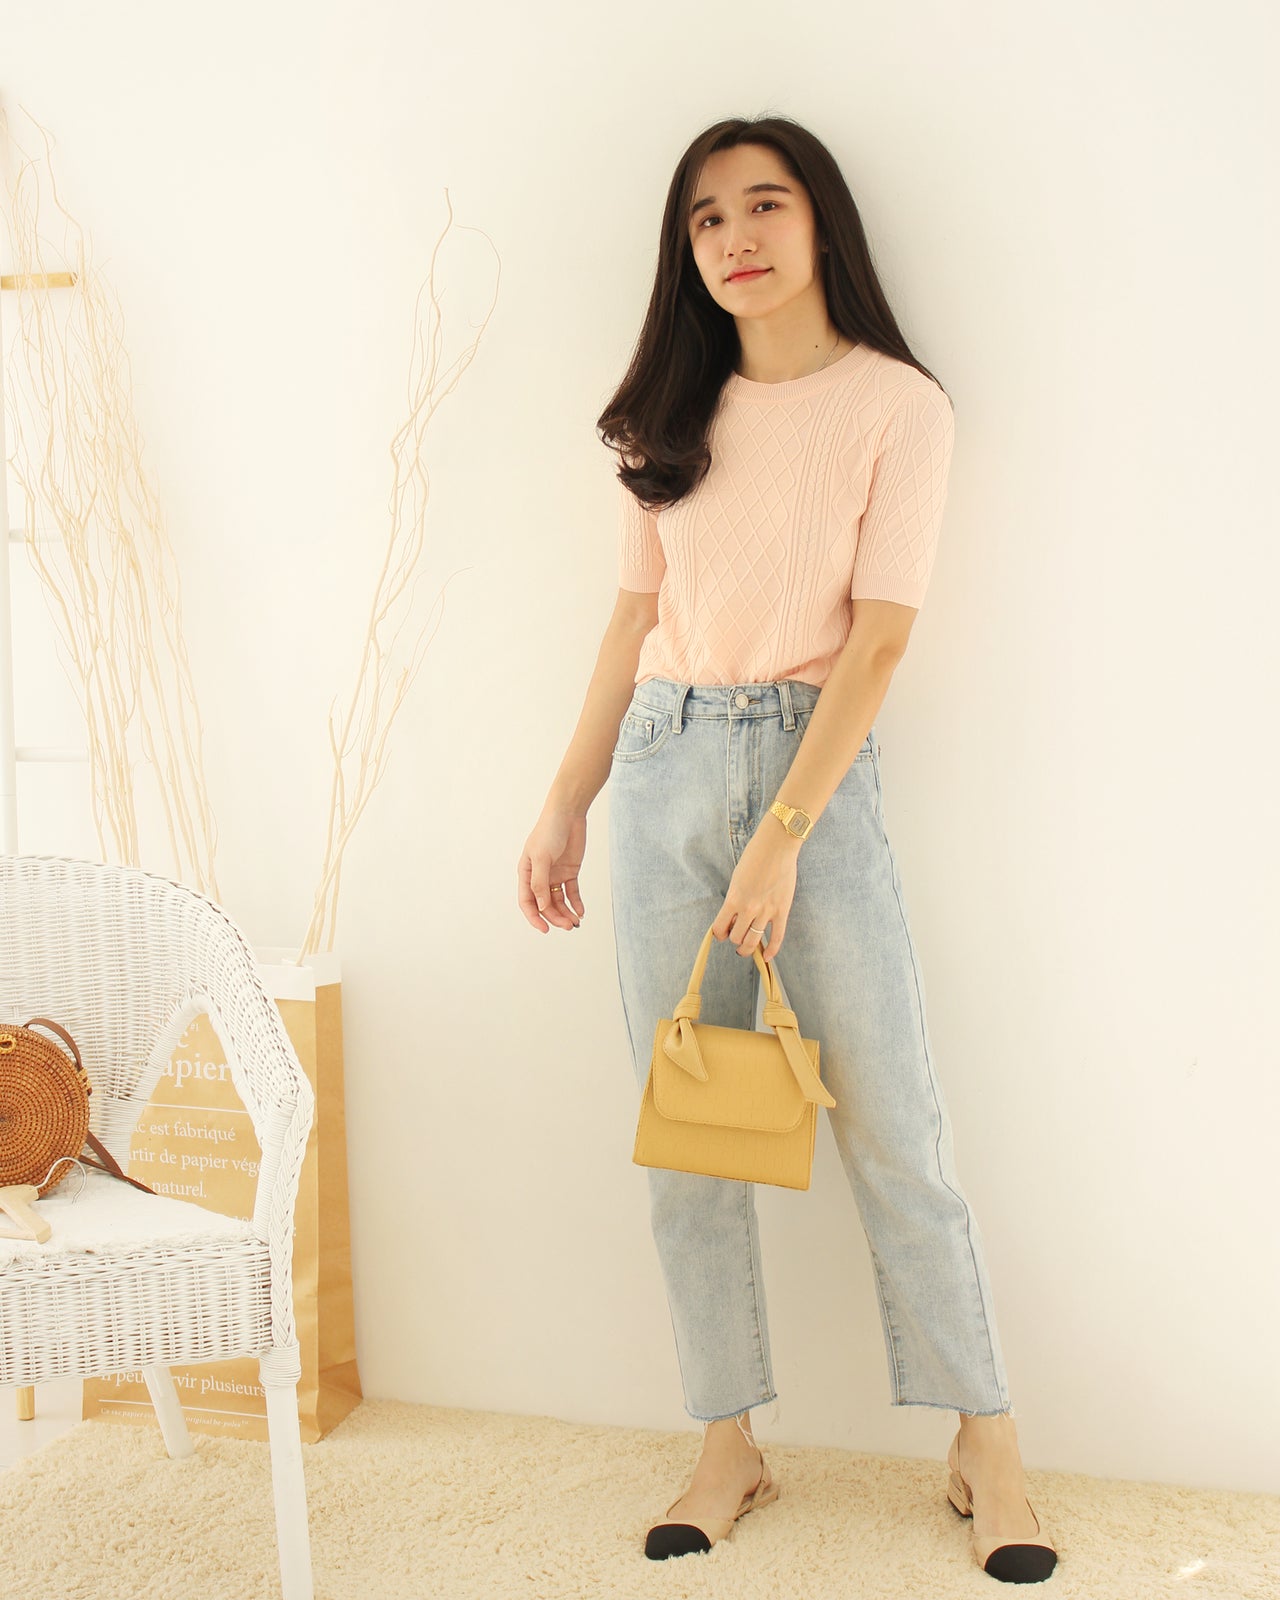 Knit Twist Top - LovelyMadness Clothing Online Fashion Malaysia